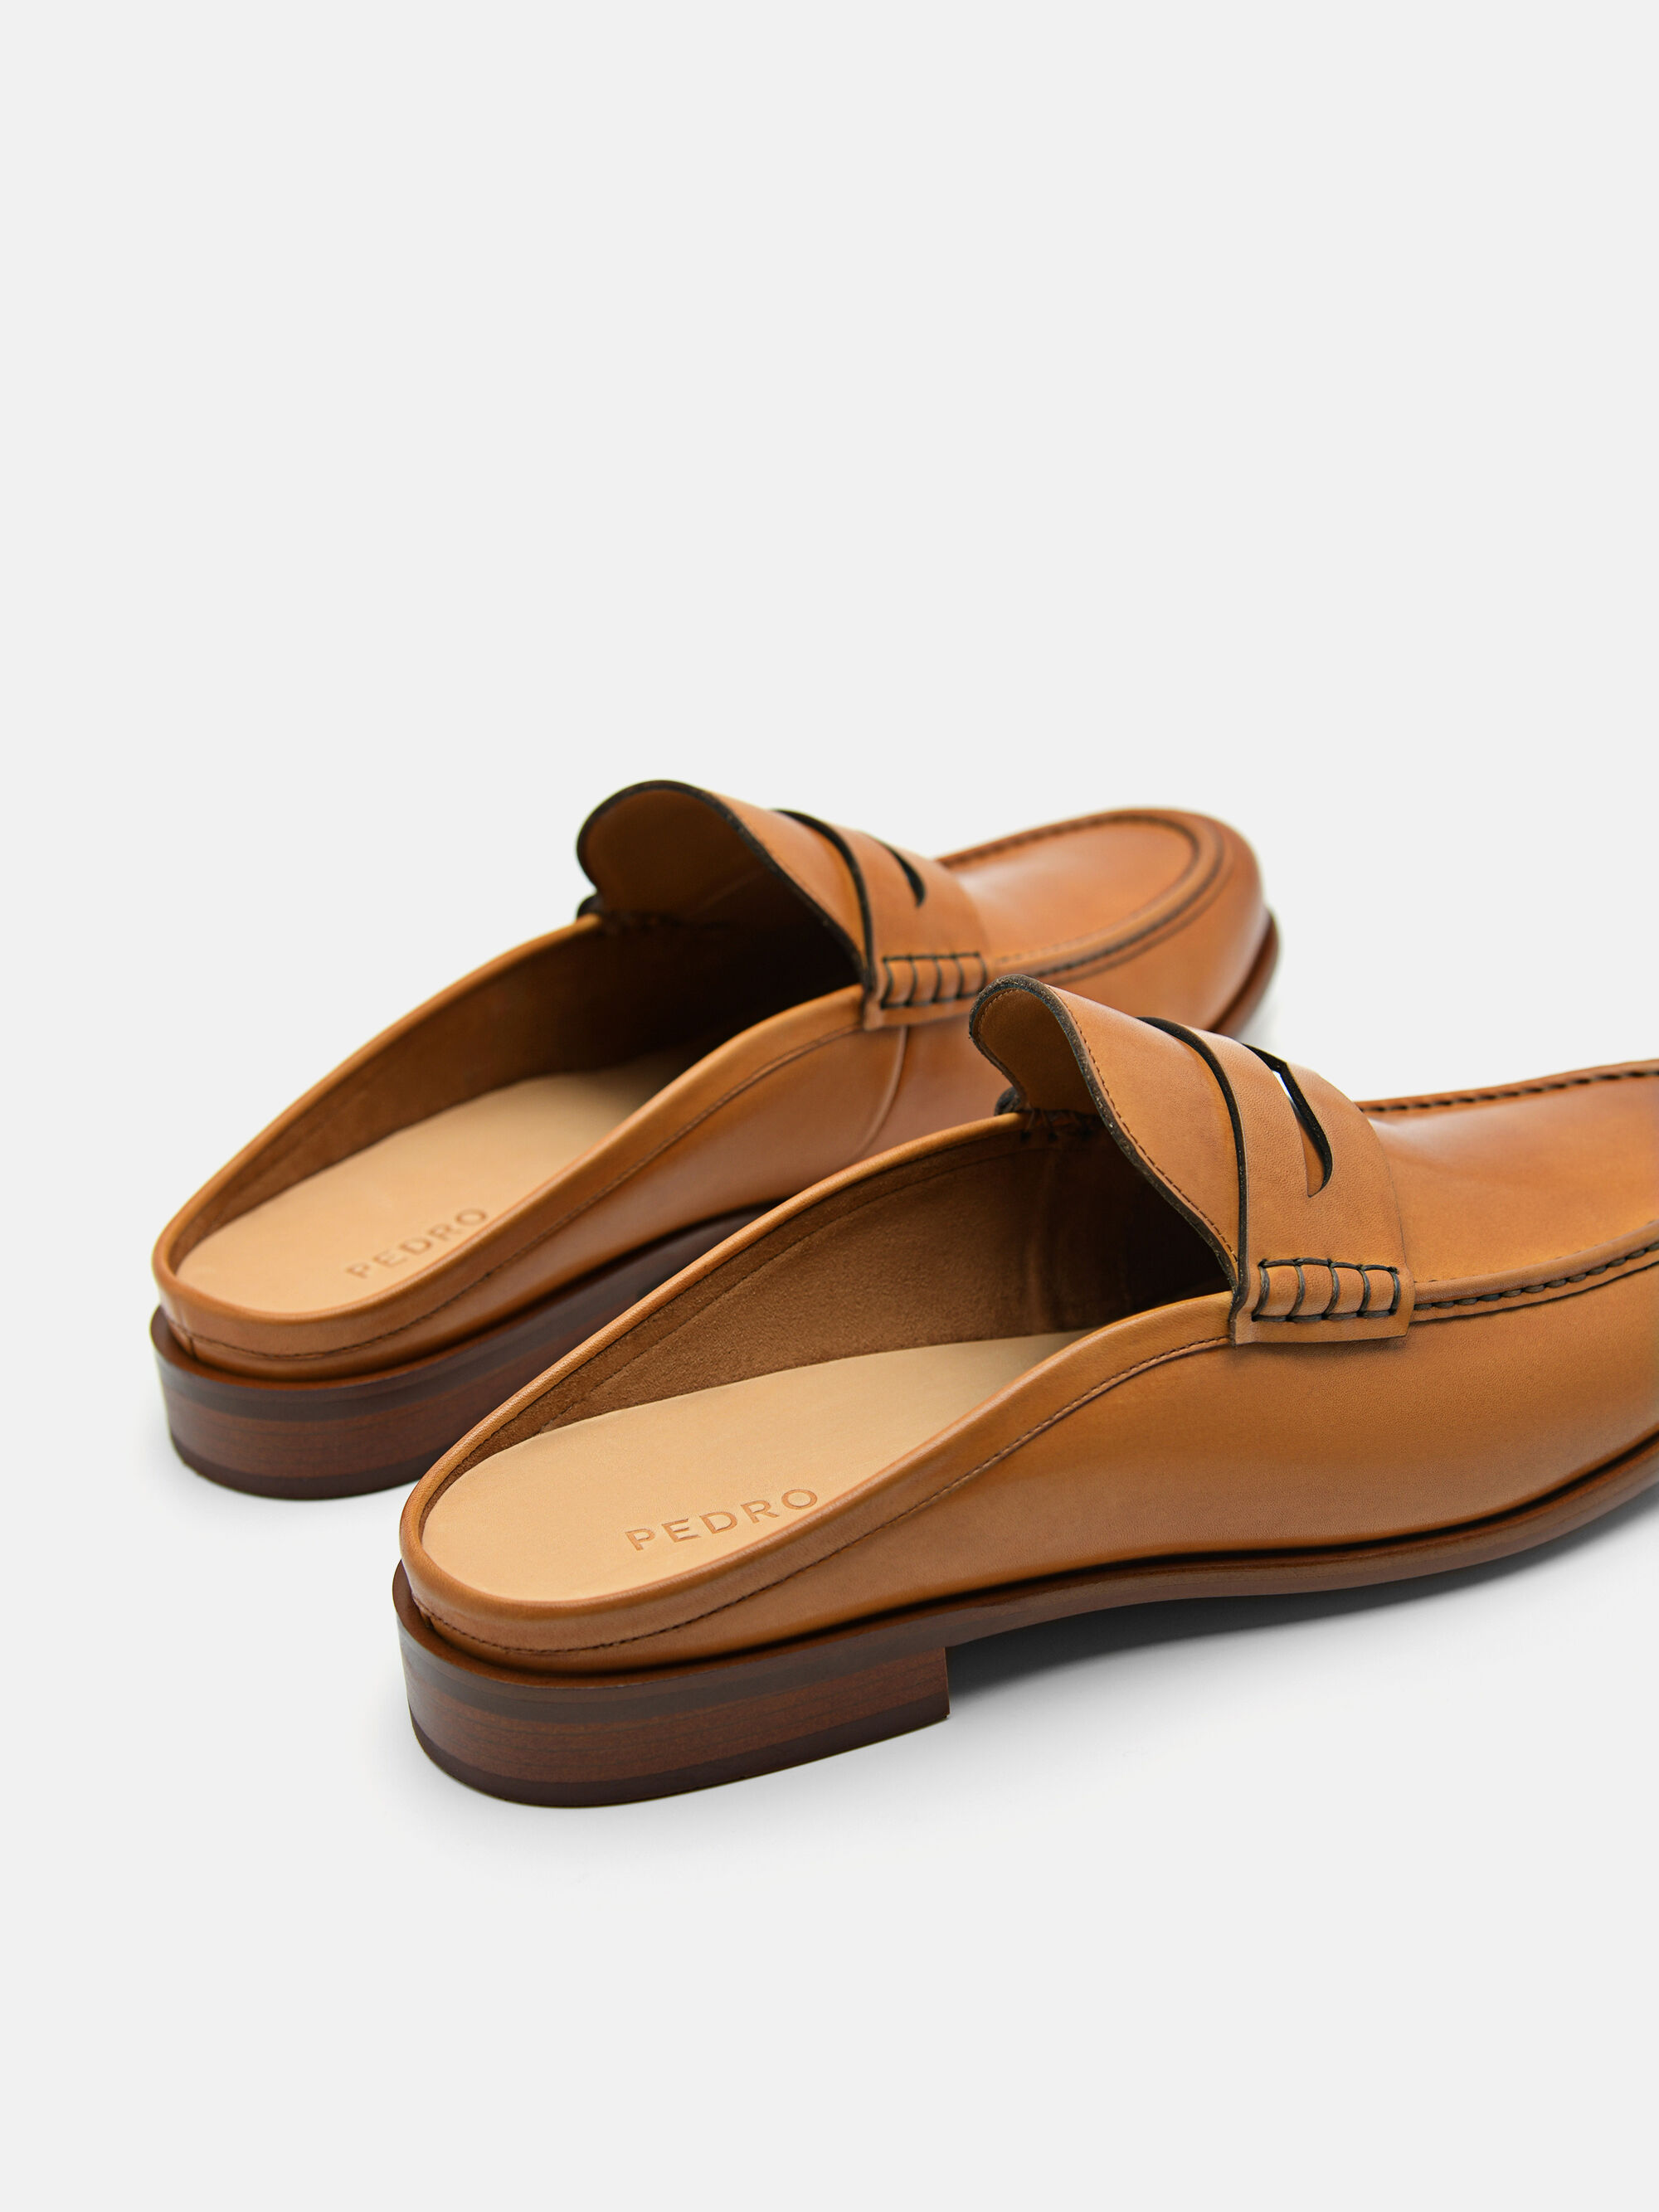 Blake Leather Slip-On Loafers, Camel